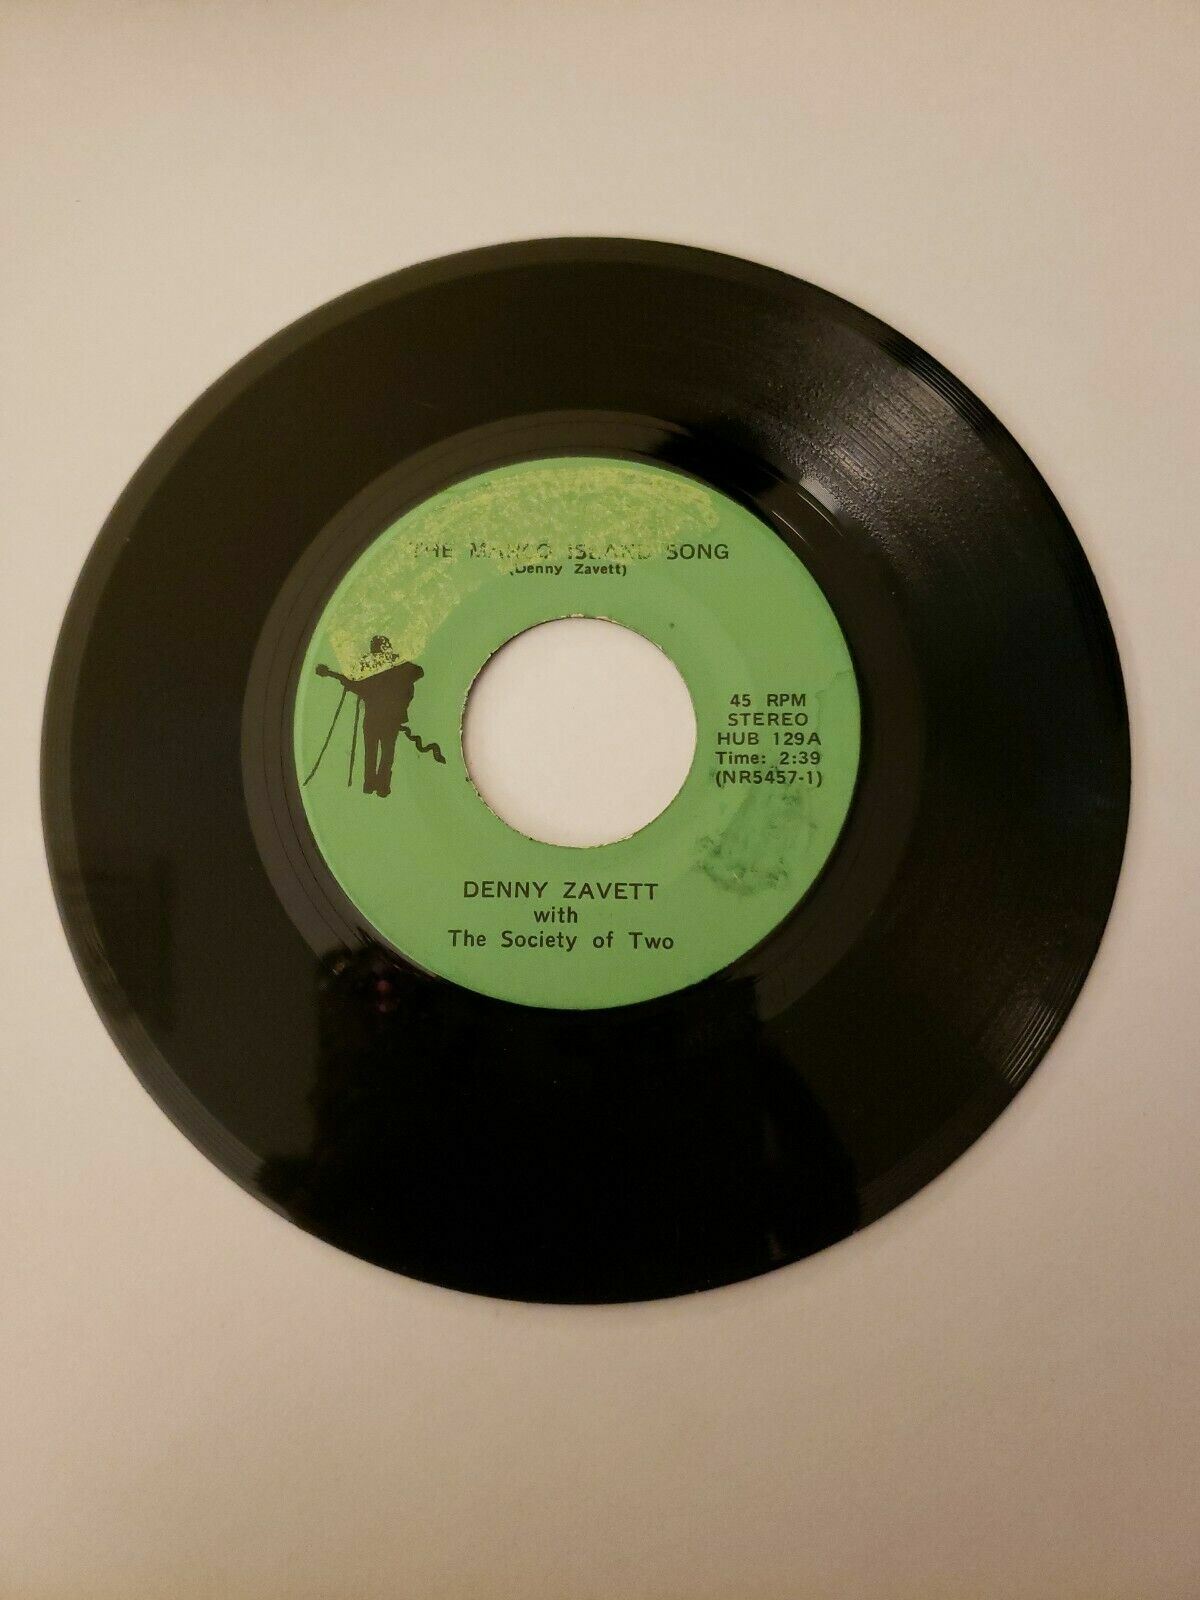 Denny Zavett - The Mango Island Song (45RPM 7” Single)(J418)